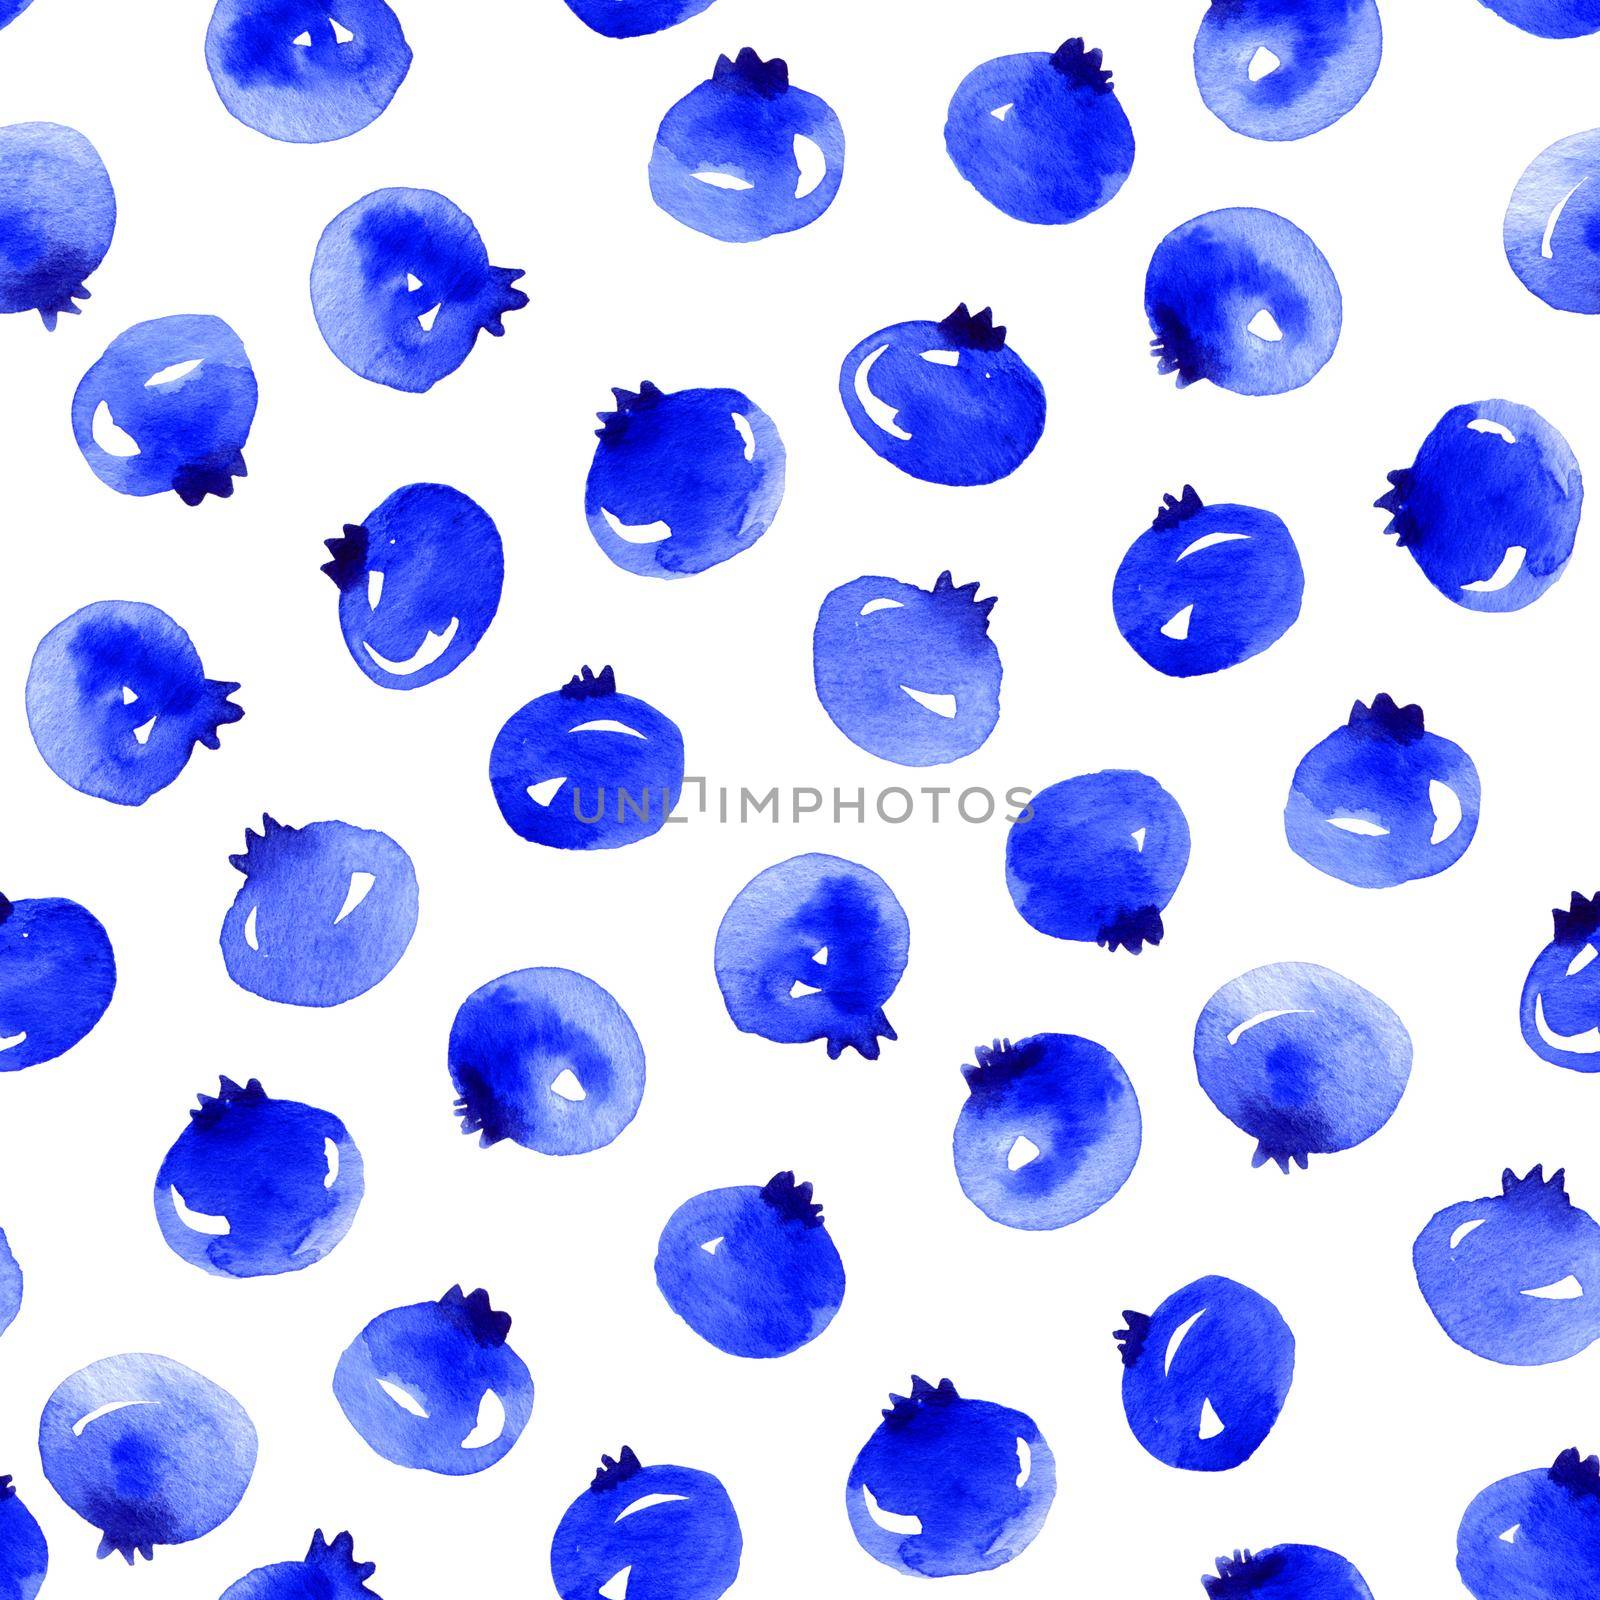 Blueberries pattern by Olatarakanova